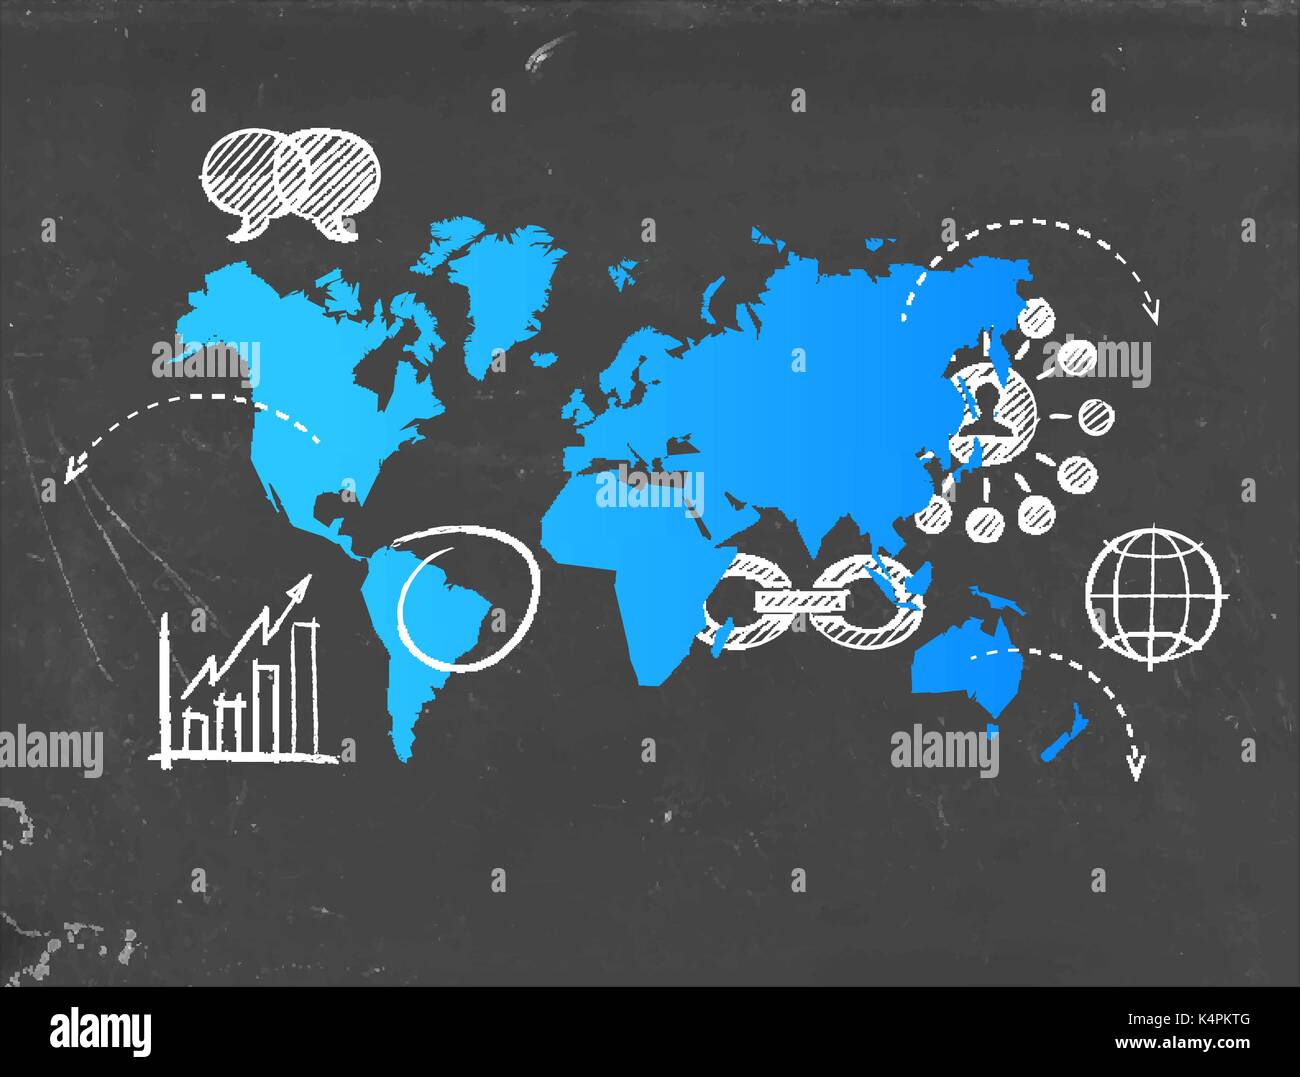 Social Media Welt Karte Vorlage mit modernen Internet Business Symbole auf Tafel gezeichnet. International Technology Kommunikationskonzept. EPS 10 Vektor. Stock Vektor